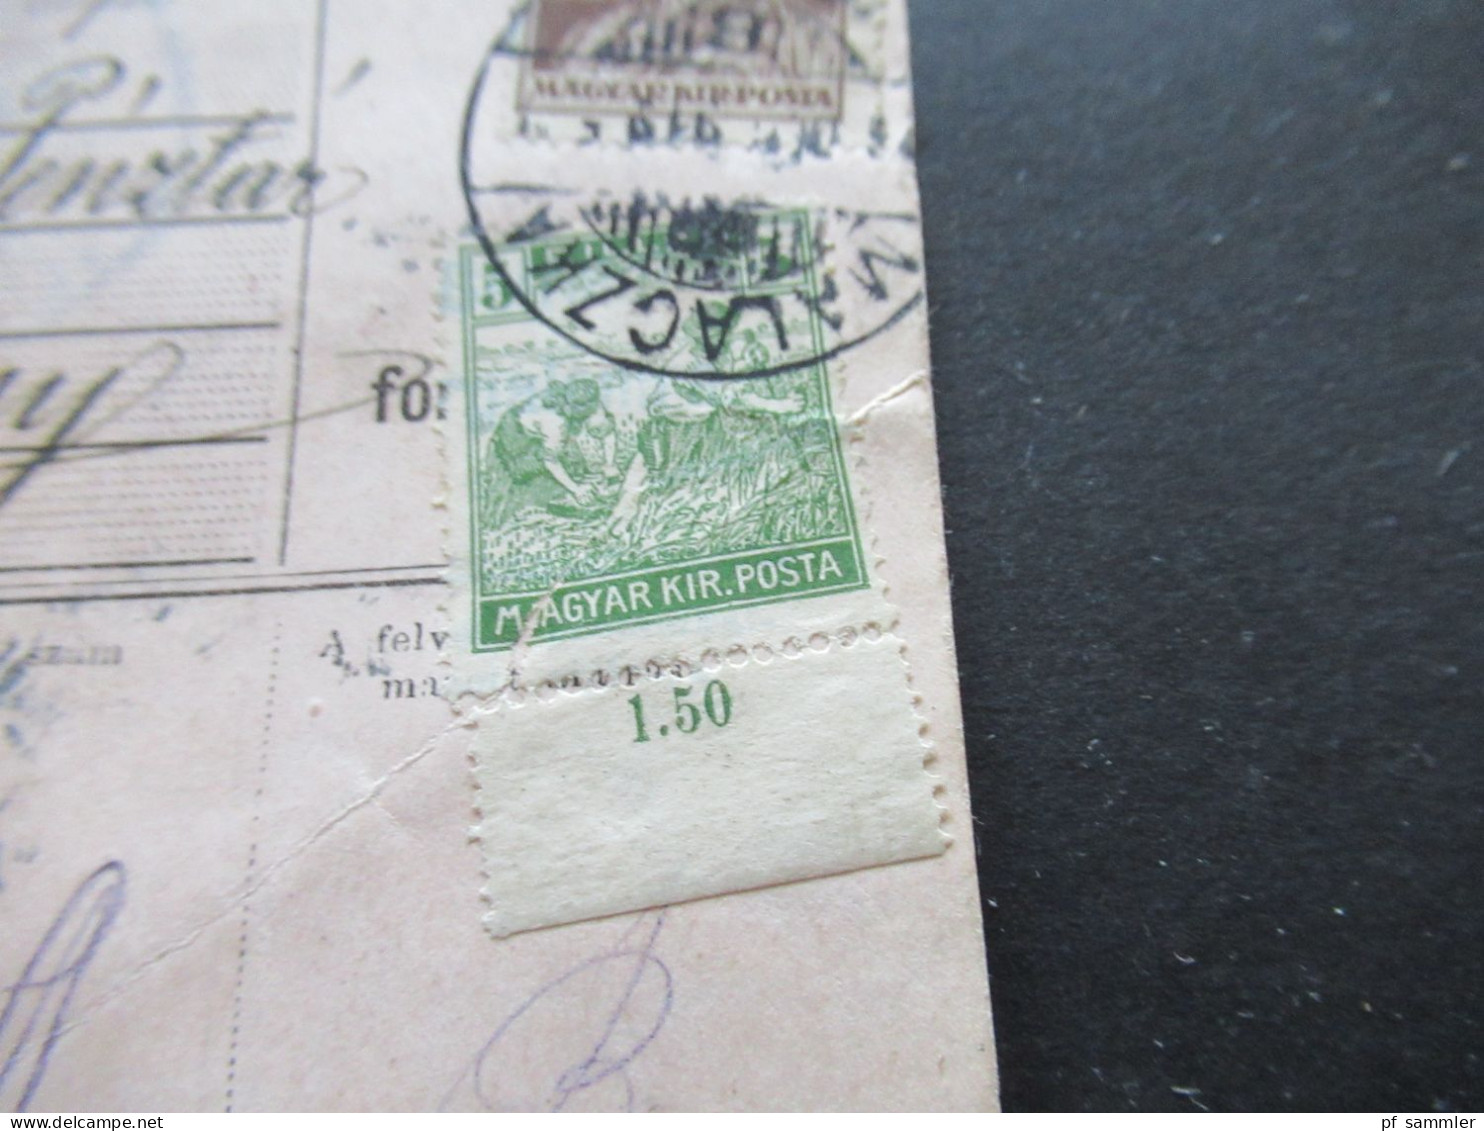 Ungarn 1919 GA / Postanweisung Postautalvany Mit 2x Zusatzfrankatur Rückseitig Violetter Stempel Pozsony - Lettres & Documents